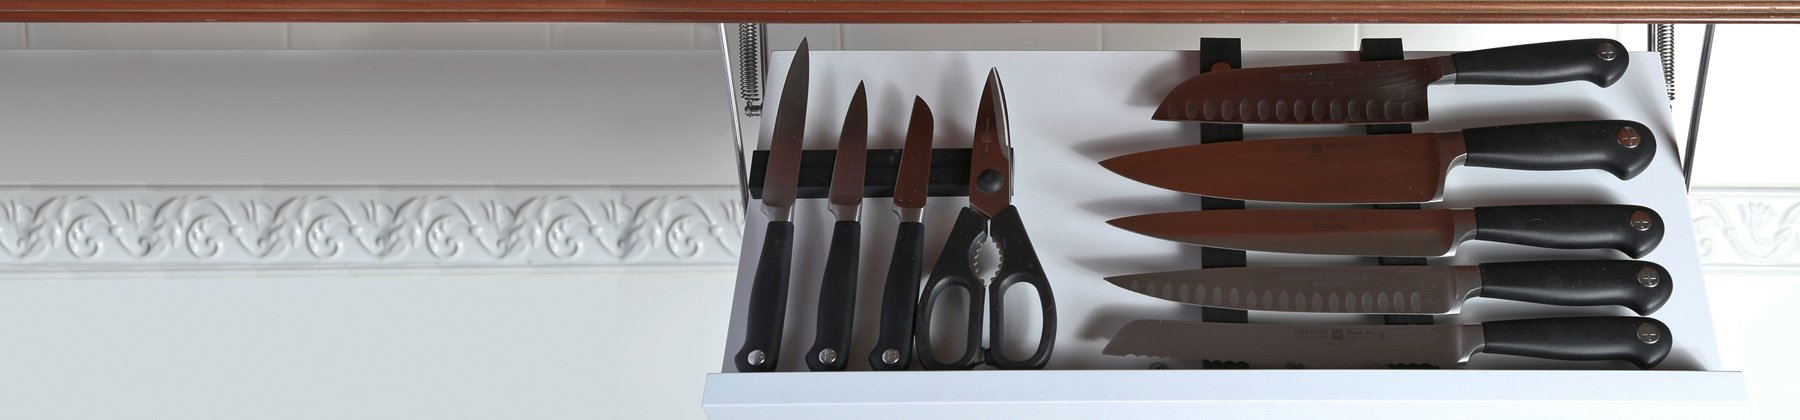 Drop Block Under Cabinet Knife Storage Rack - Small 